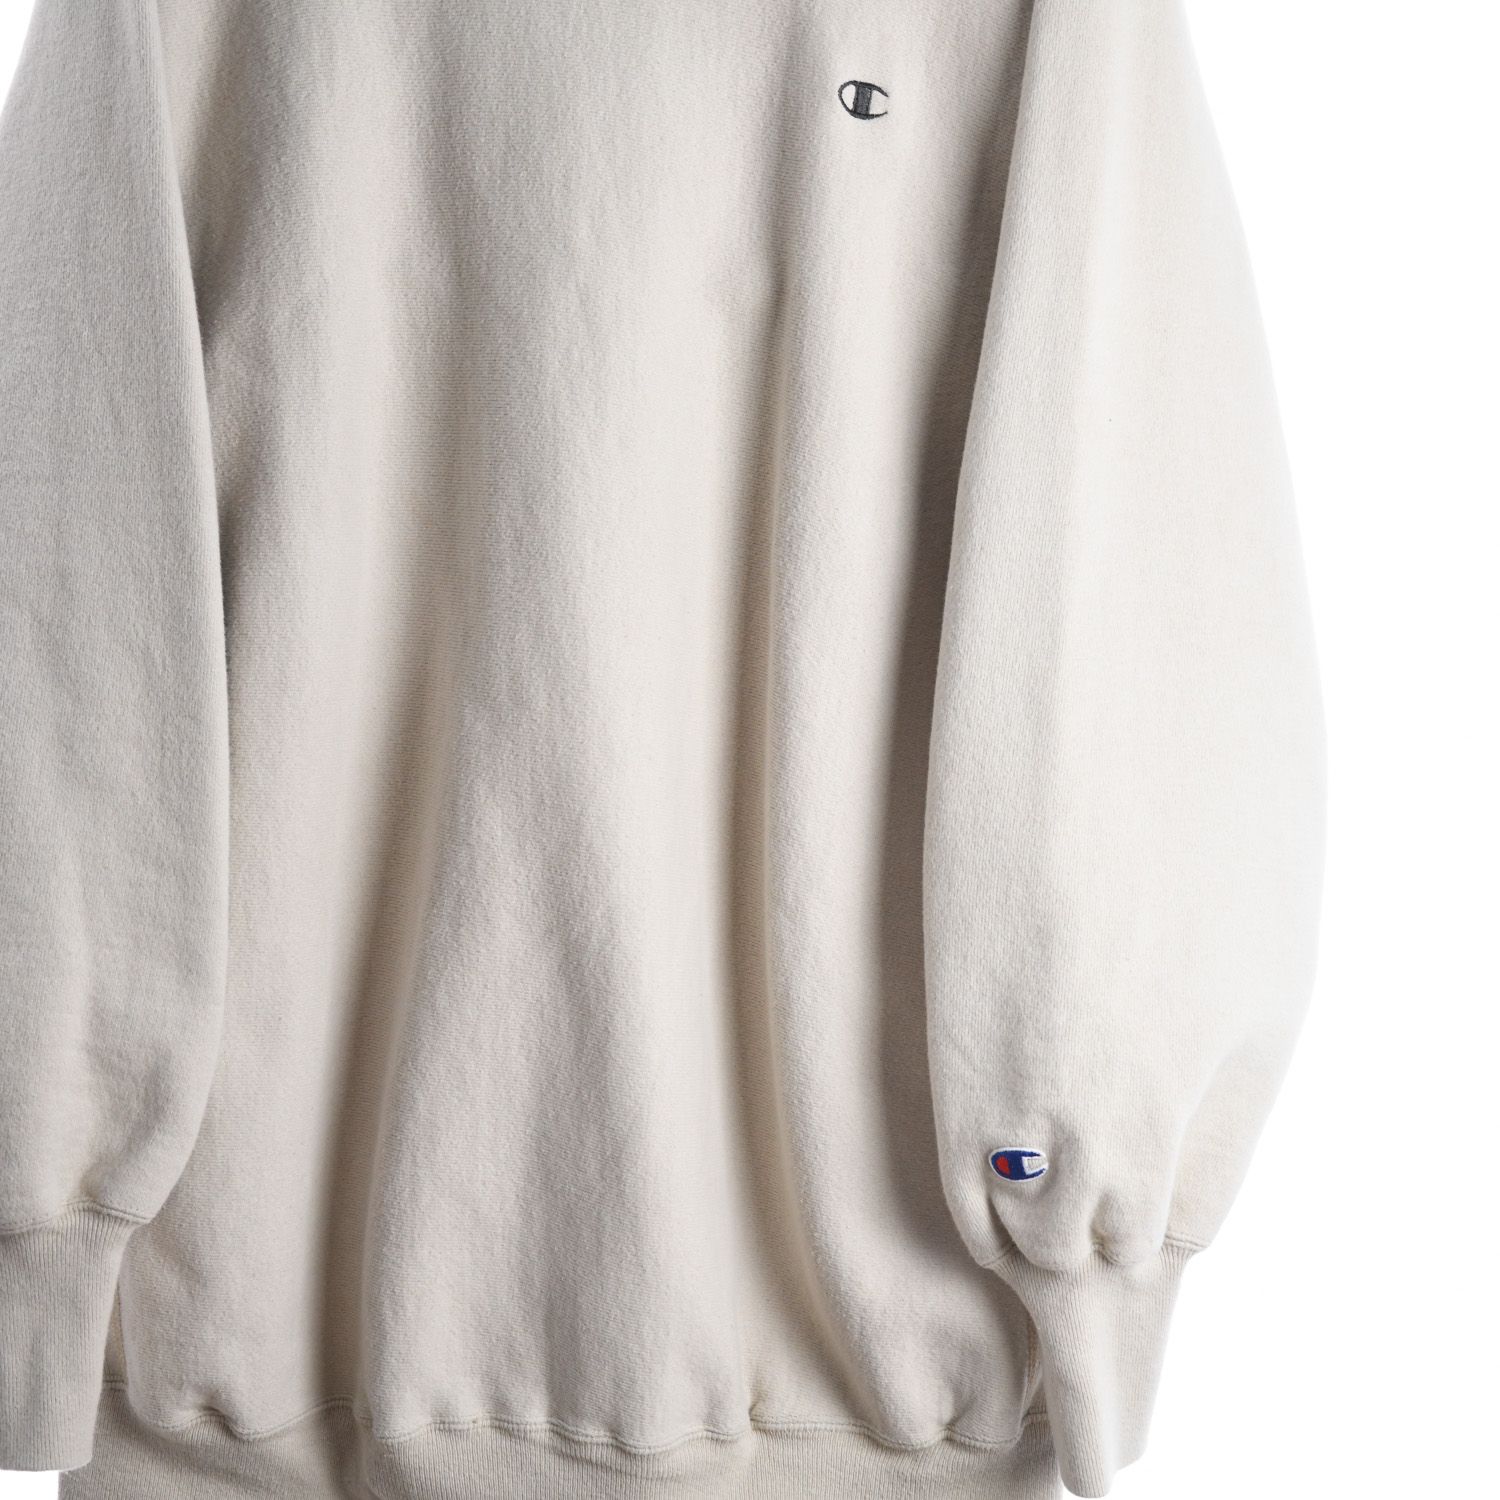 Champion 1990s Reverse Weave Cream Sweatshirt